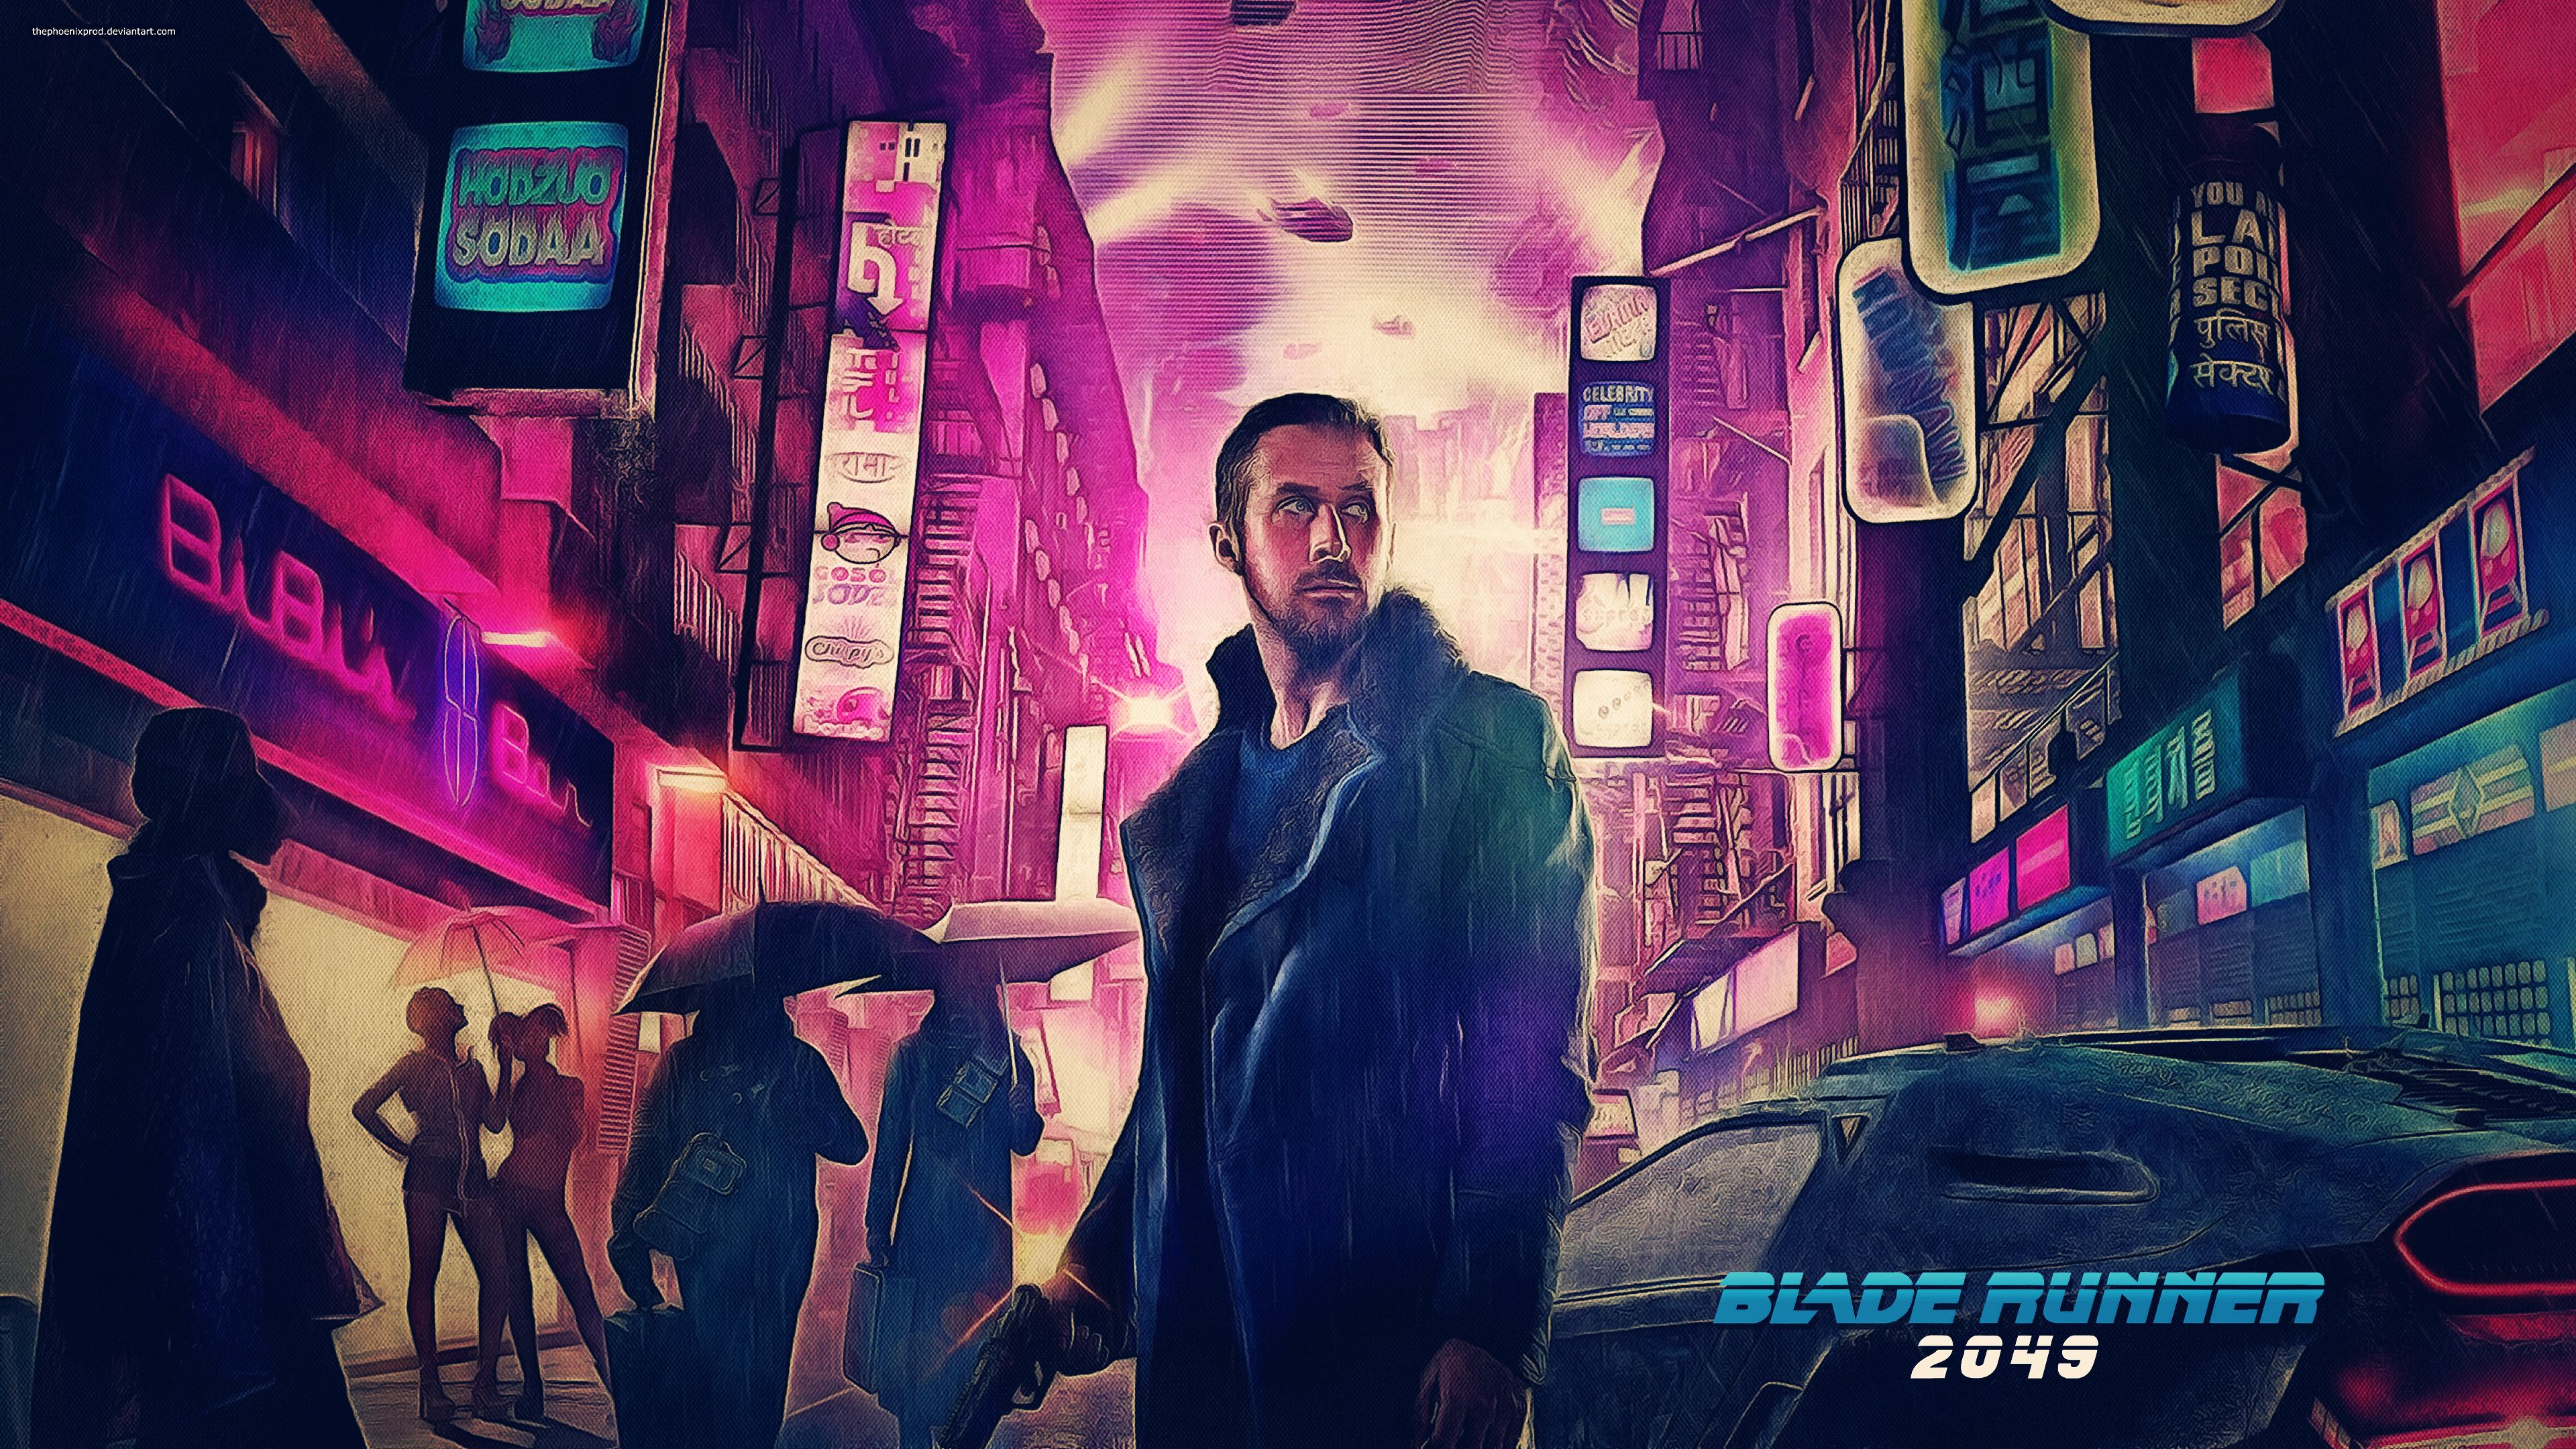 Blade Runner 2049 Wallpapers 4k Hd Blade Runner 2049 Backgrounds On Wallpaperbat 